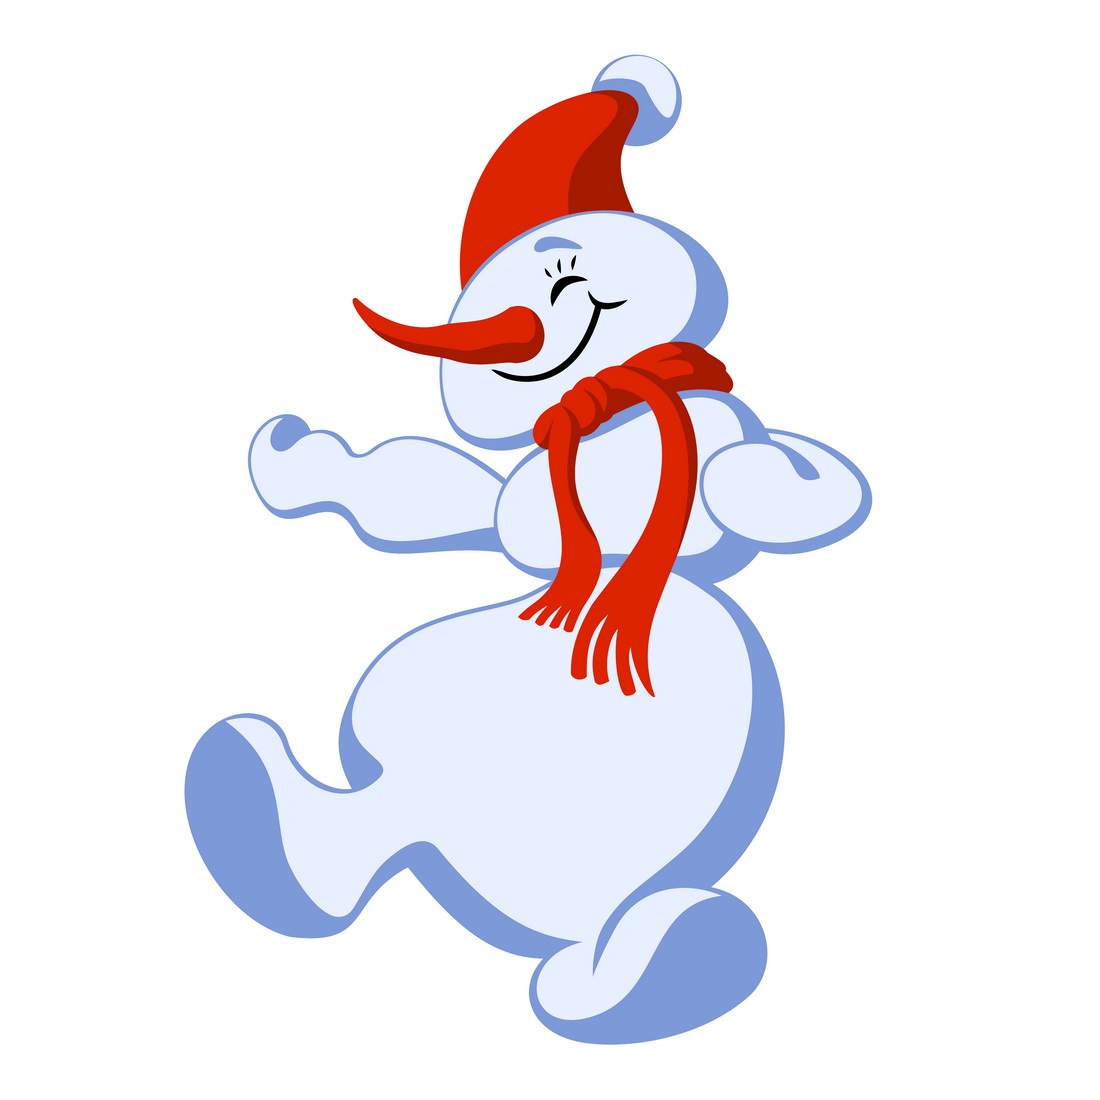 Cartoon Dancing Snowman Graphics Design cover image.